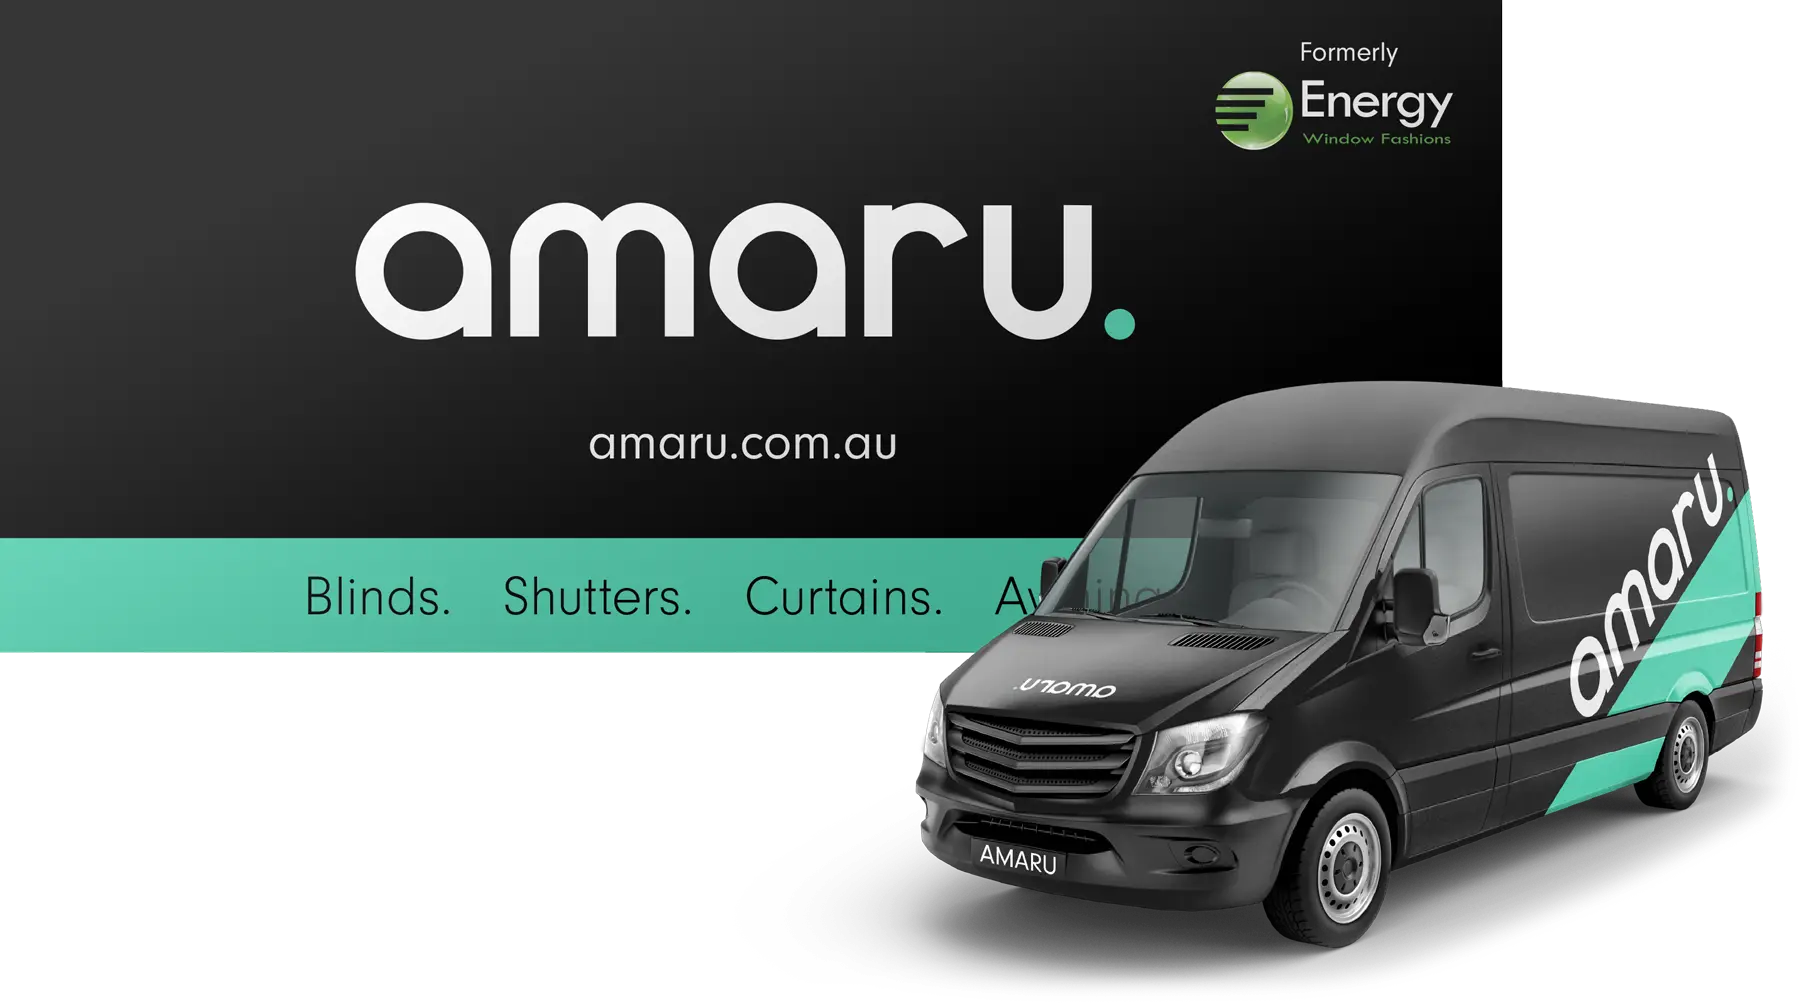 Former Name of Amaru was Energy Window Fashions